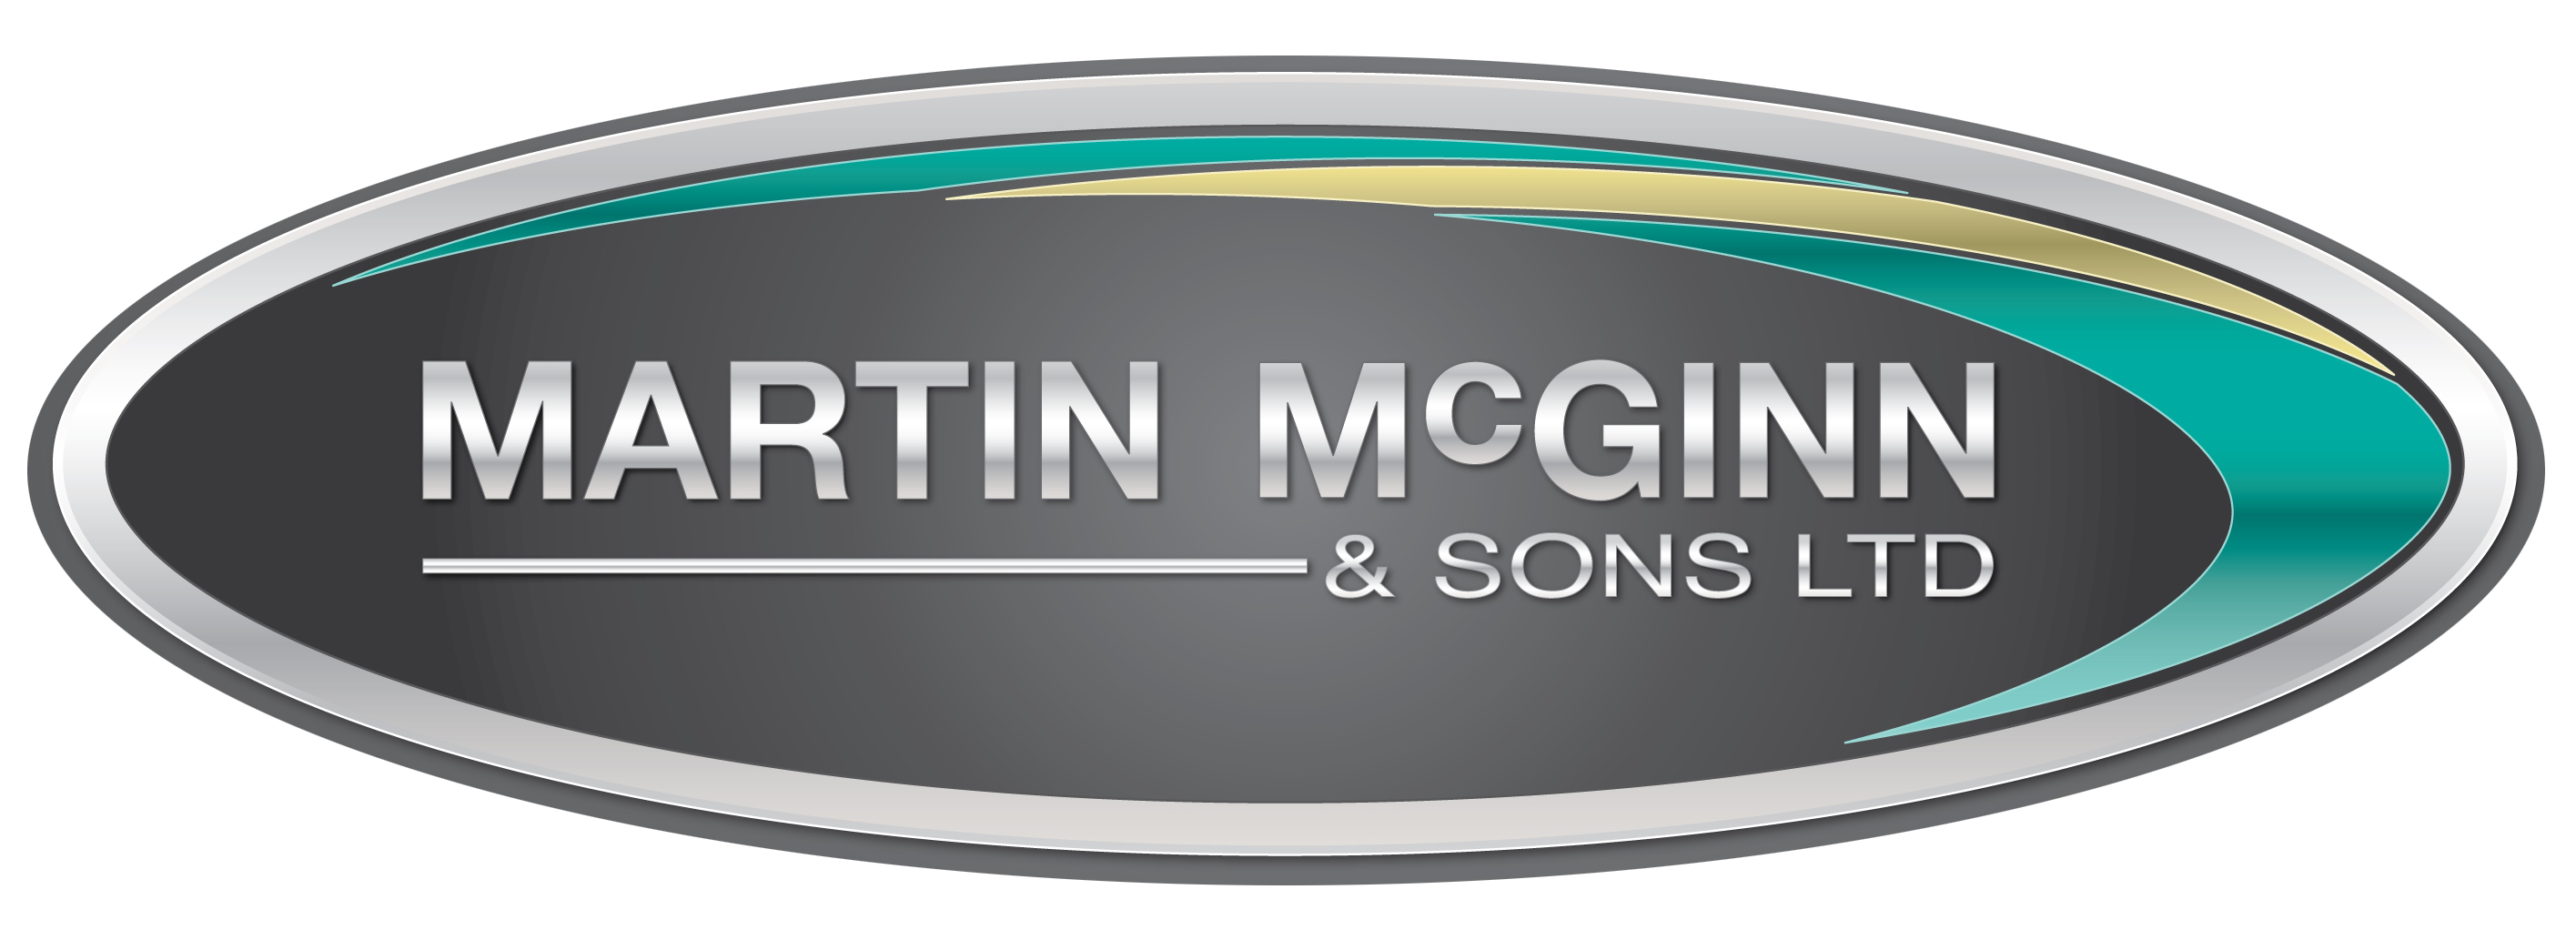 Martin McGinn & Sons Ltd